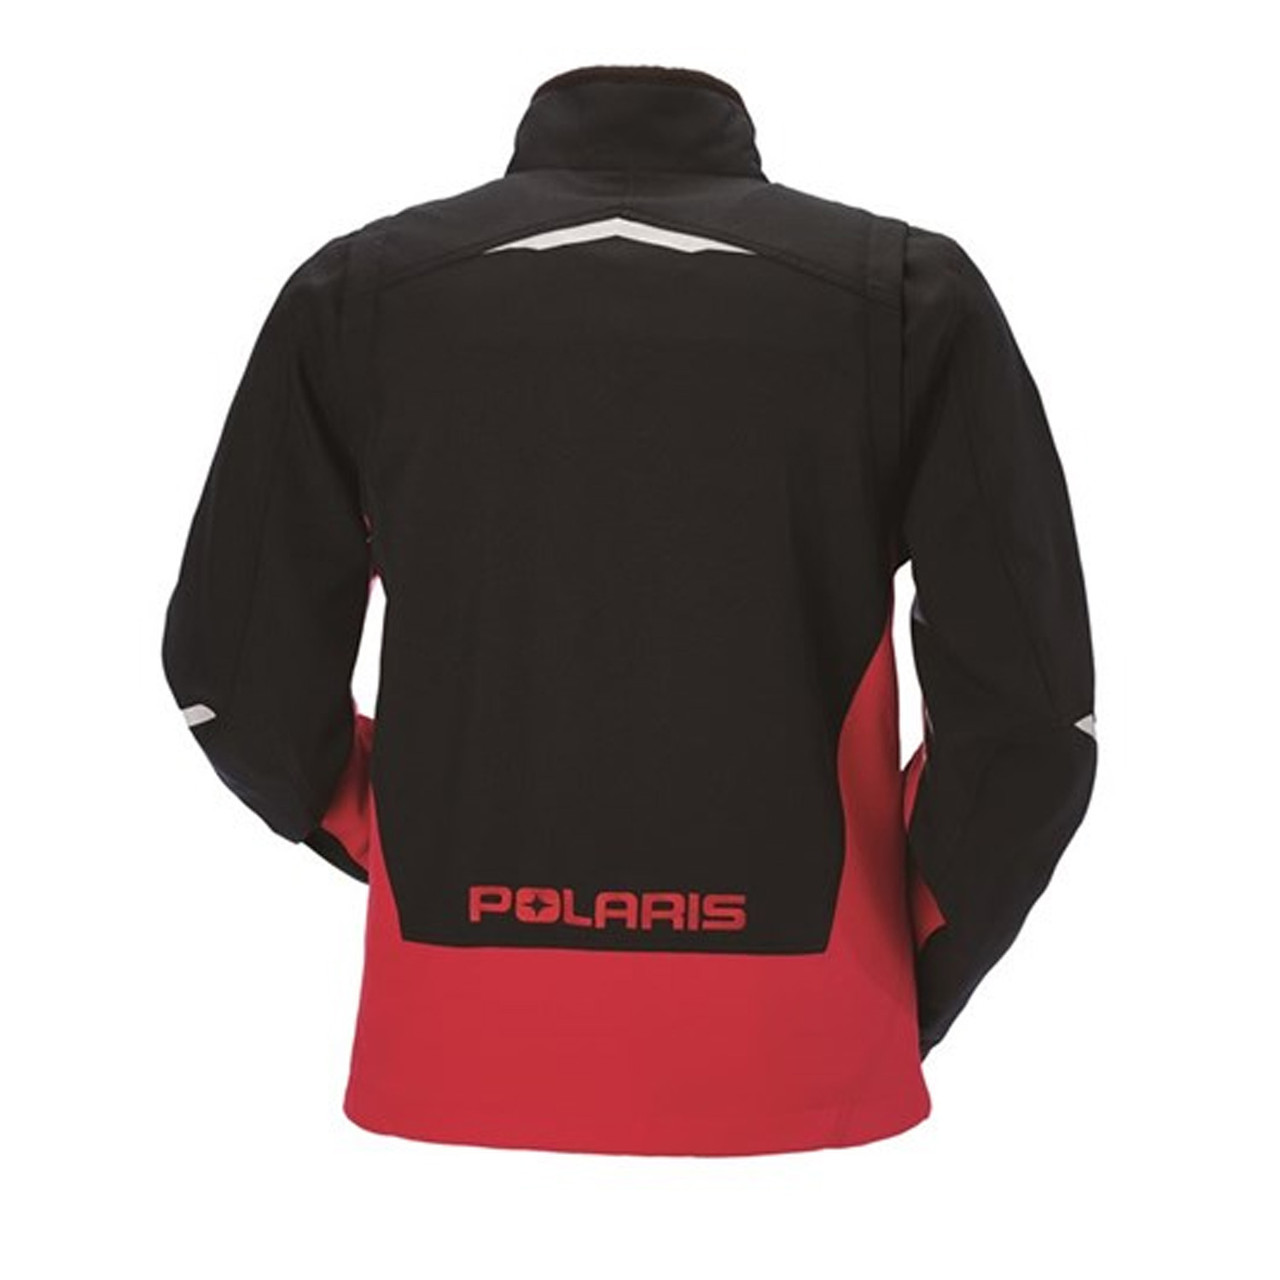 Polaris New OEM Men's Pro Jacket, X-Large, Black/Red, 286770209